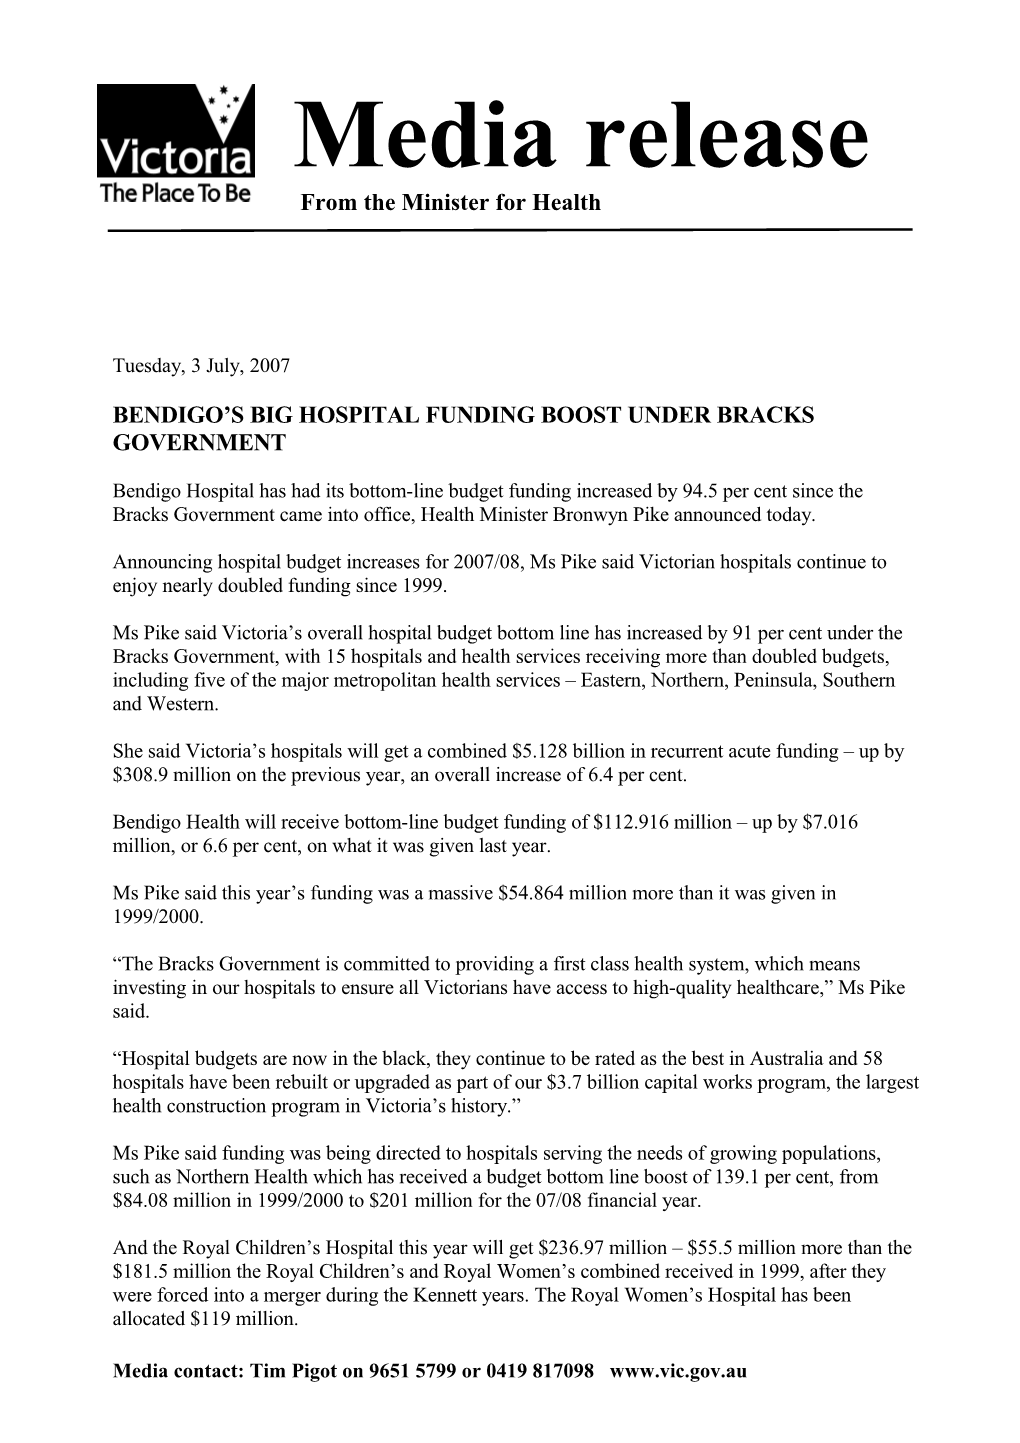 Bendigo S Big Hospital Funding Boost Under Bracks Government